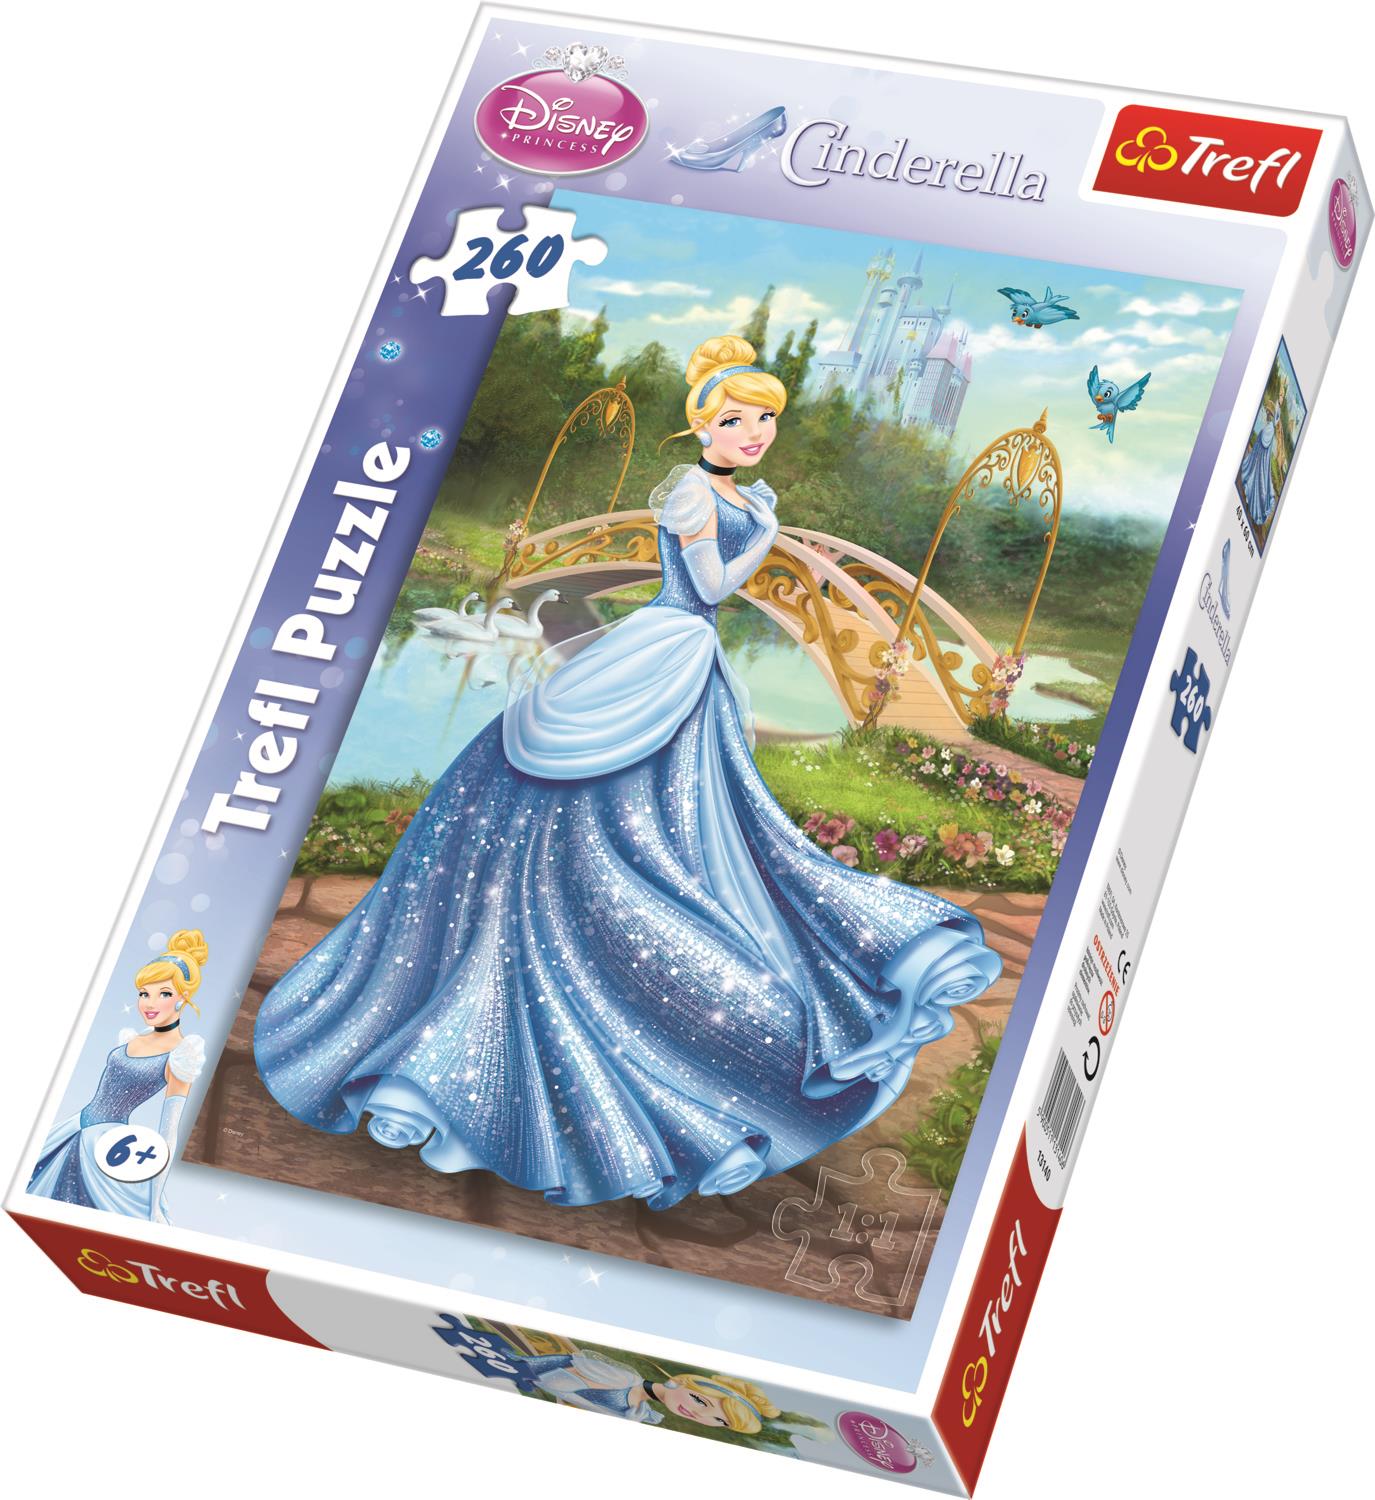 Trefl Çocuk Puzzle 13140 Princess Enchanted Dress, Disney 260 Parça Puzzle